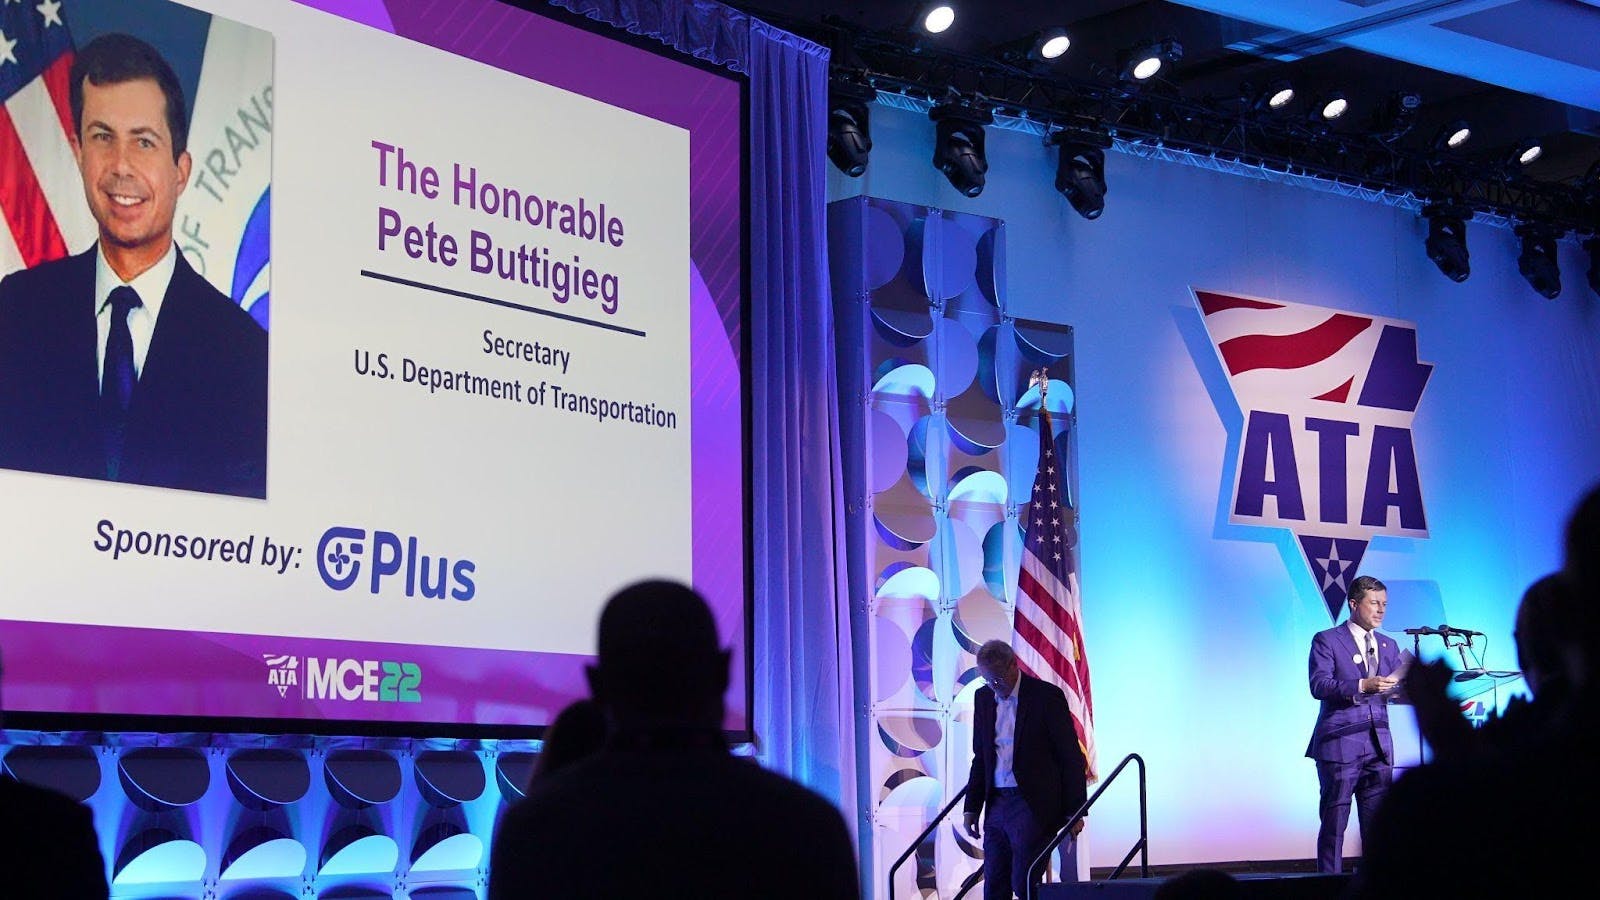 Presentation at MCE 2022, The Honorable Pete Buttigieg, Secretary US Department of Transportation